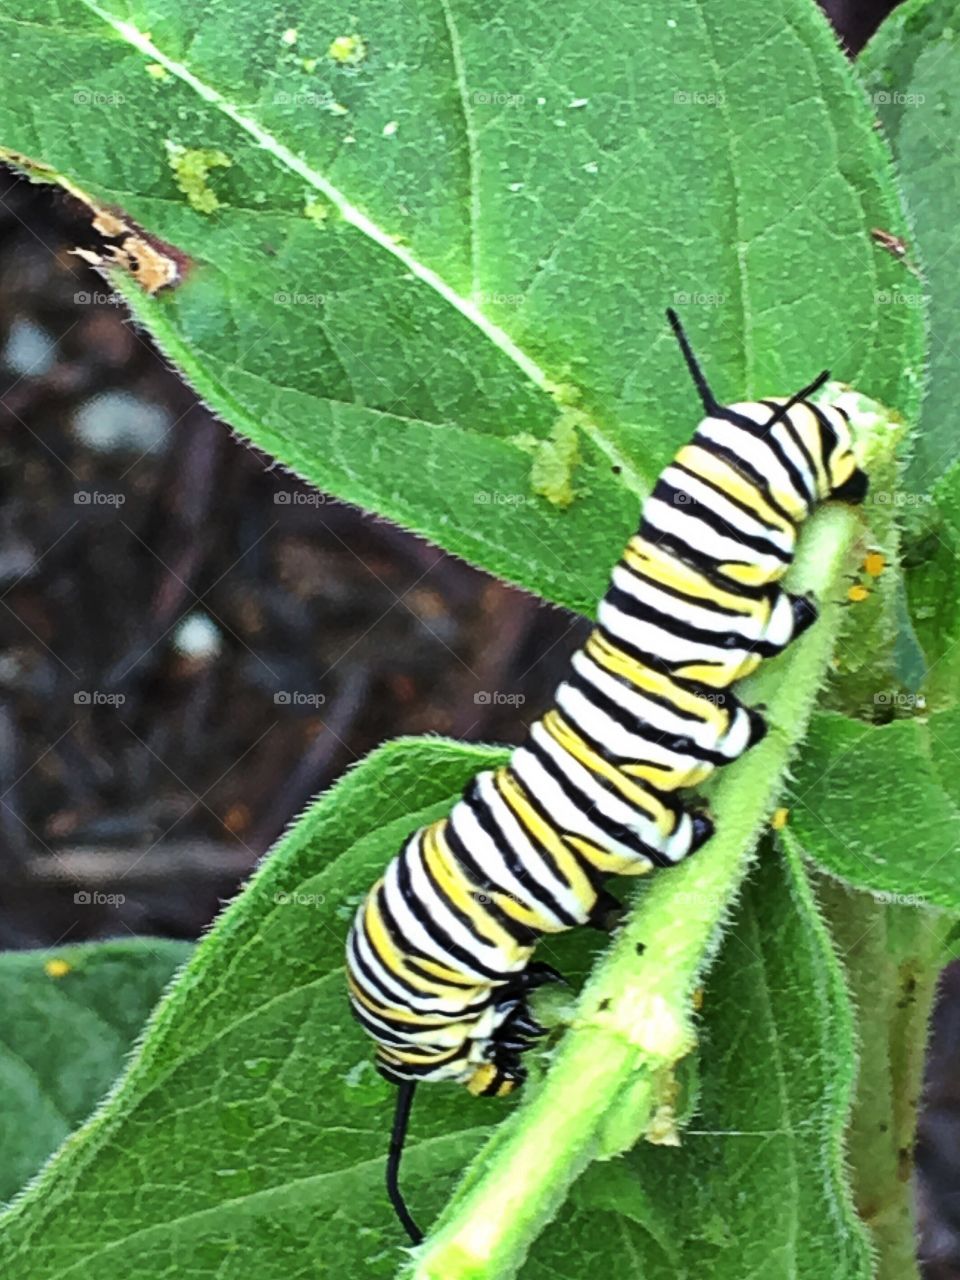 Monarch caterpillar nature photo